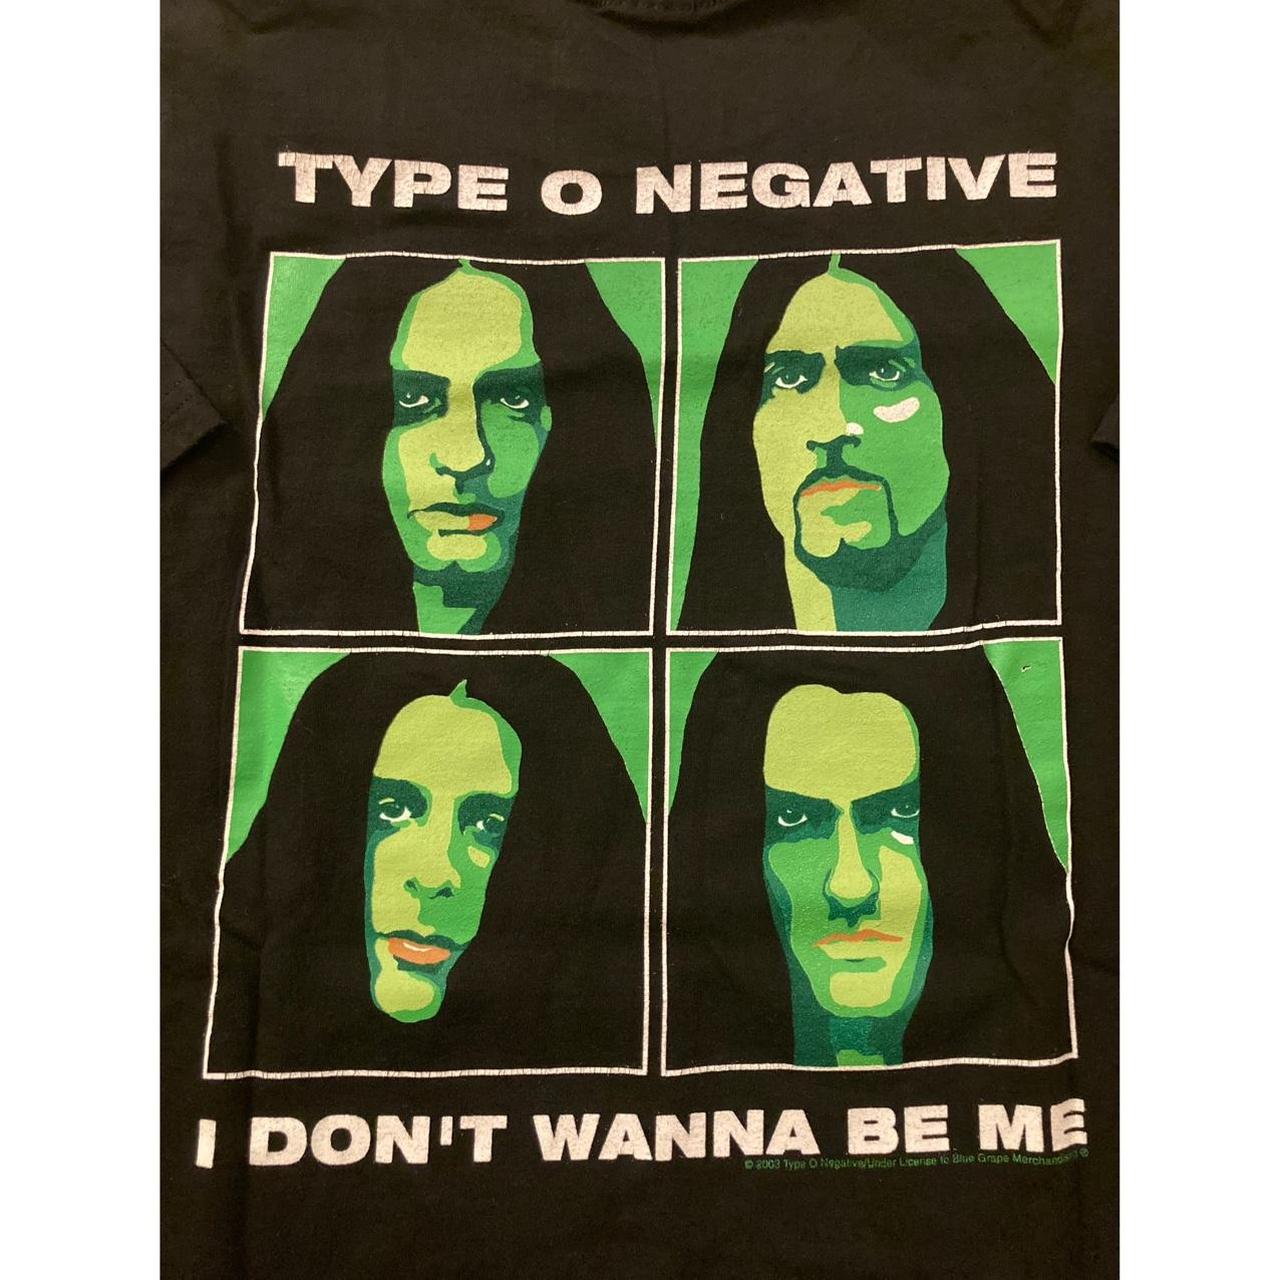 Type O Negative - I Don't Wanna Be Me (2003)